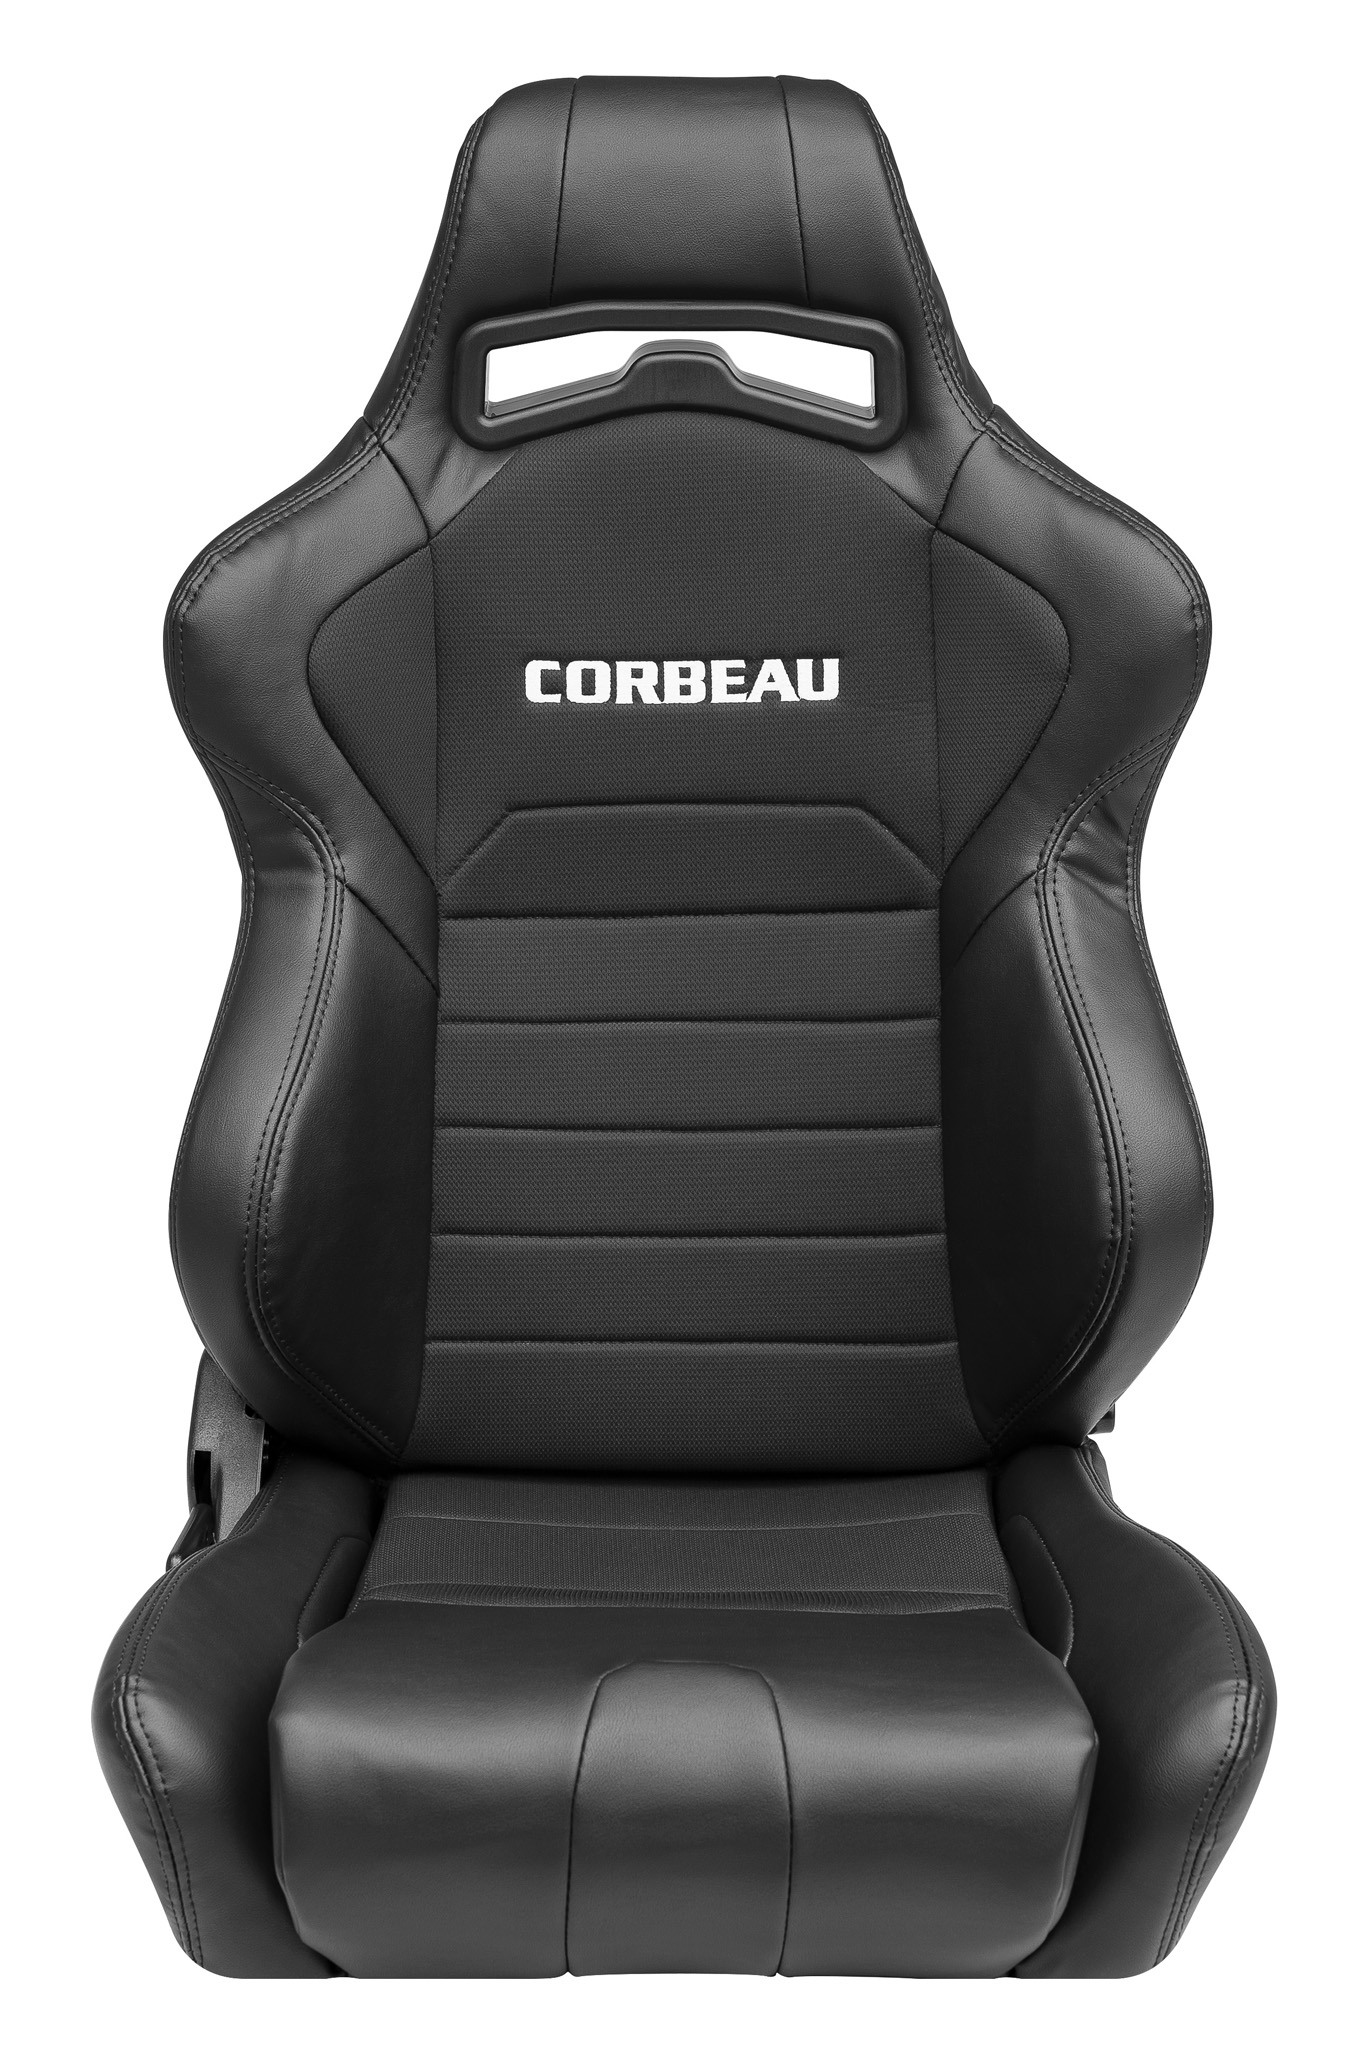 Corbeau LG1 Seats - Black Cloth